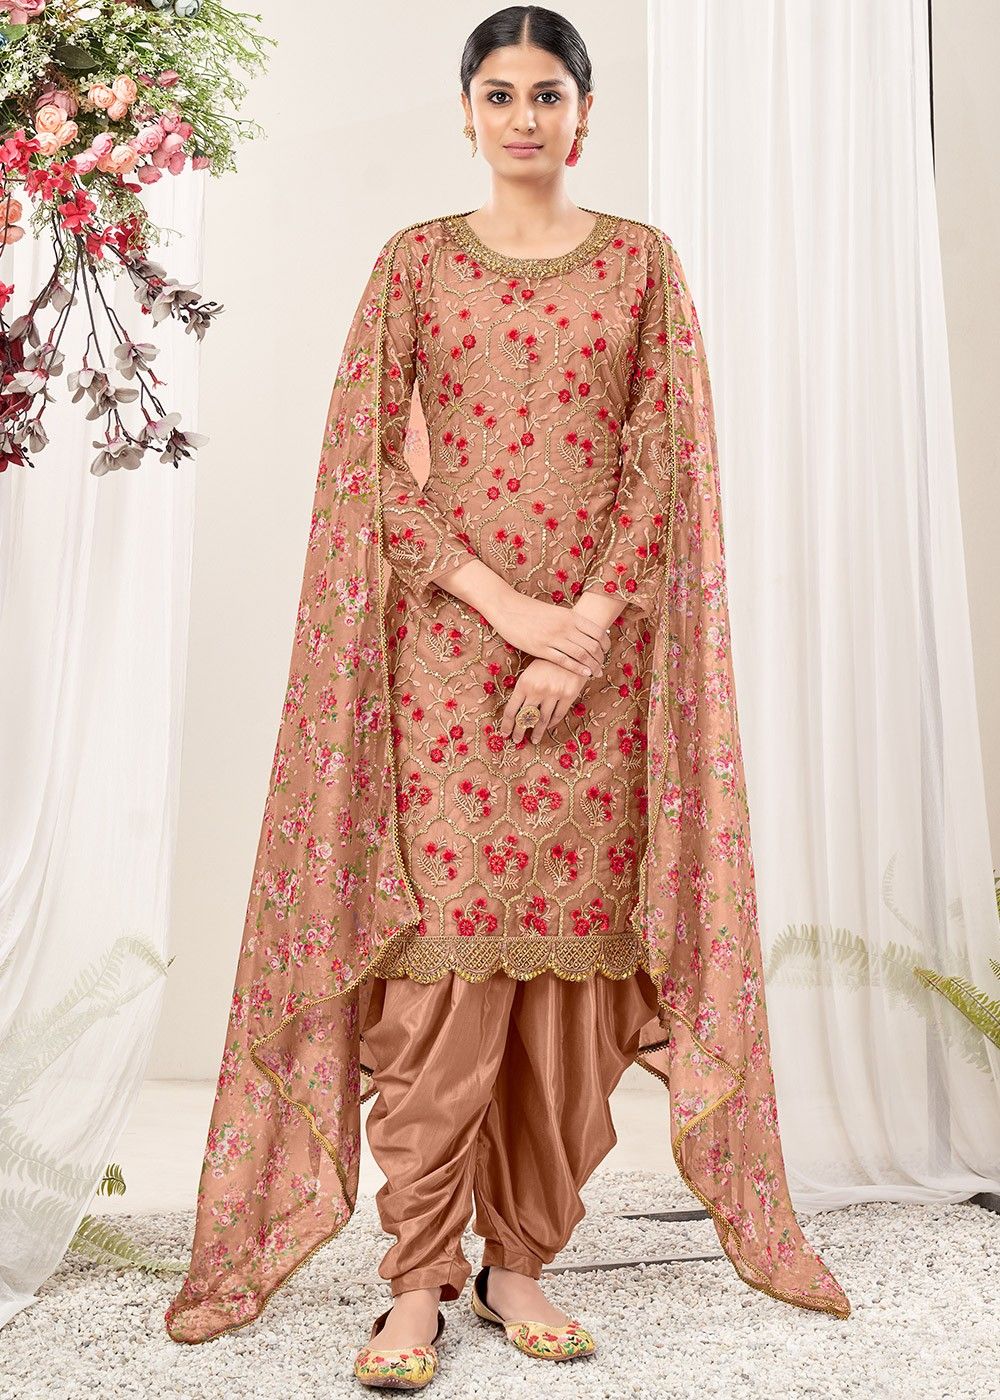 Punjabi Suits Stitched Online | Punjabi Suits Online With Price